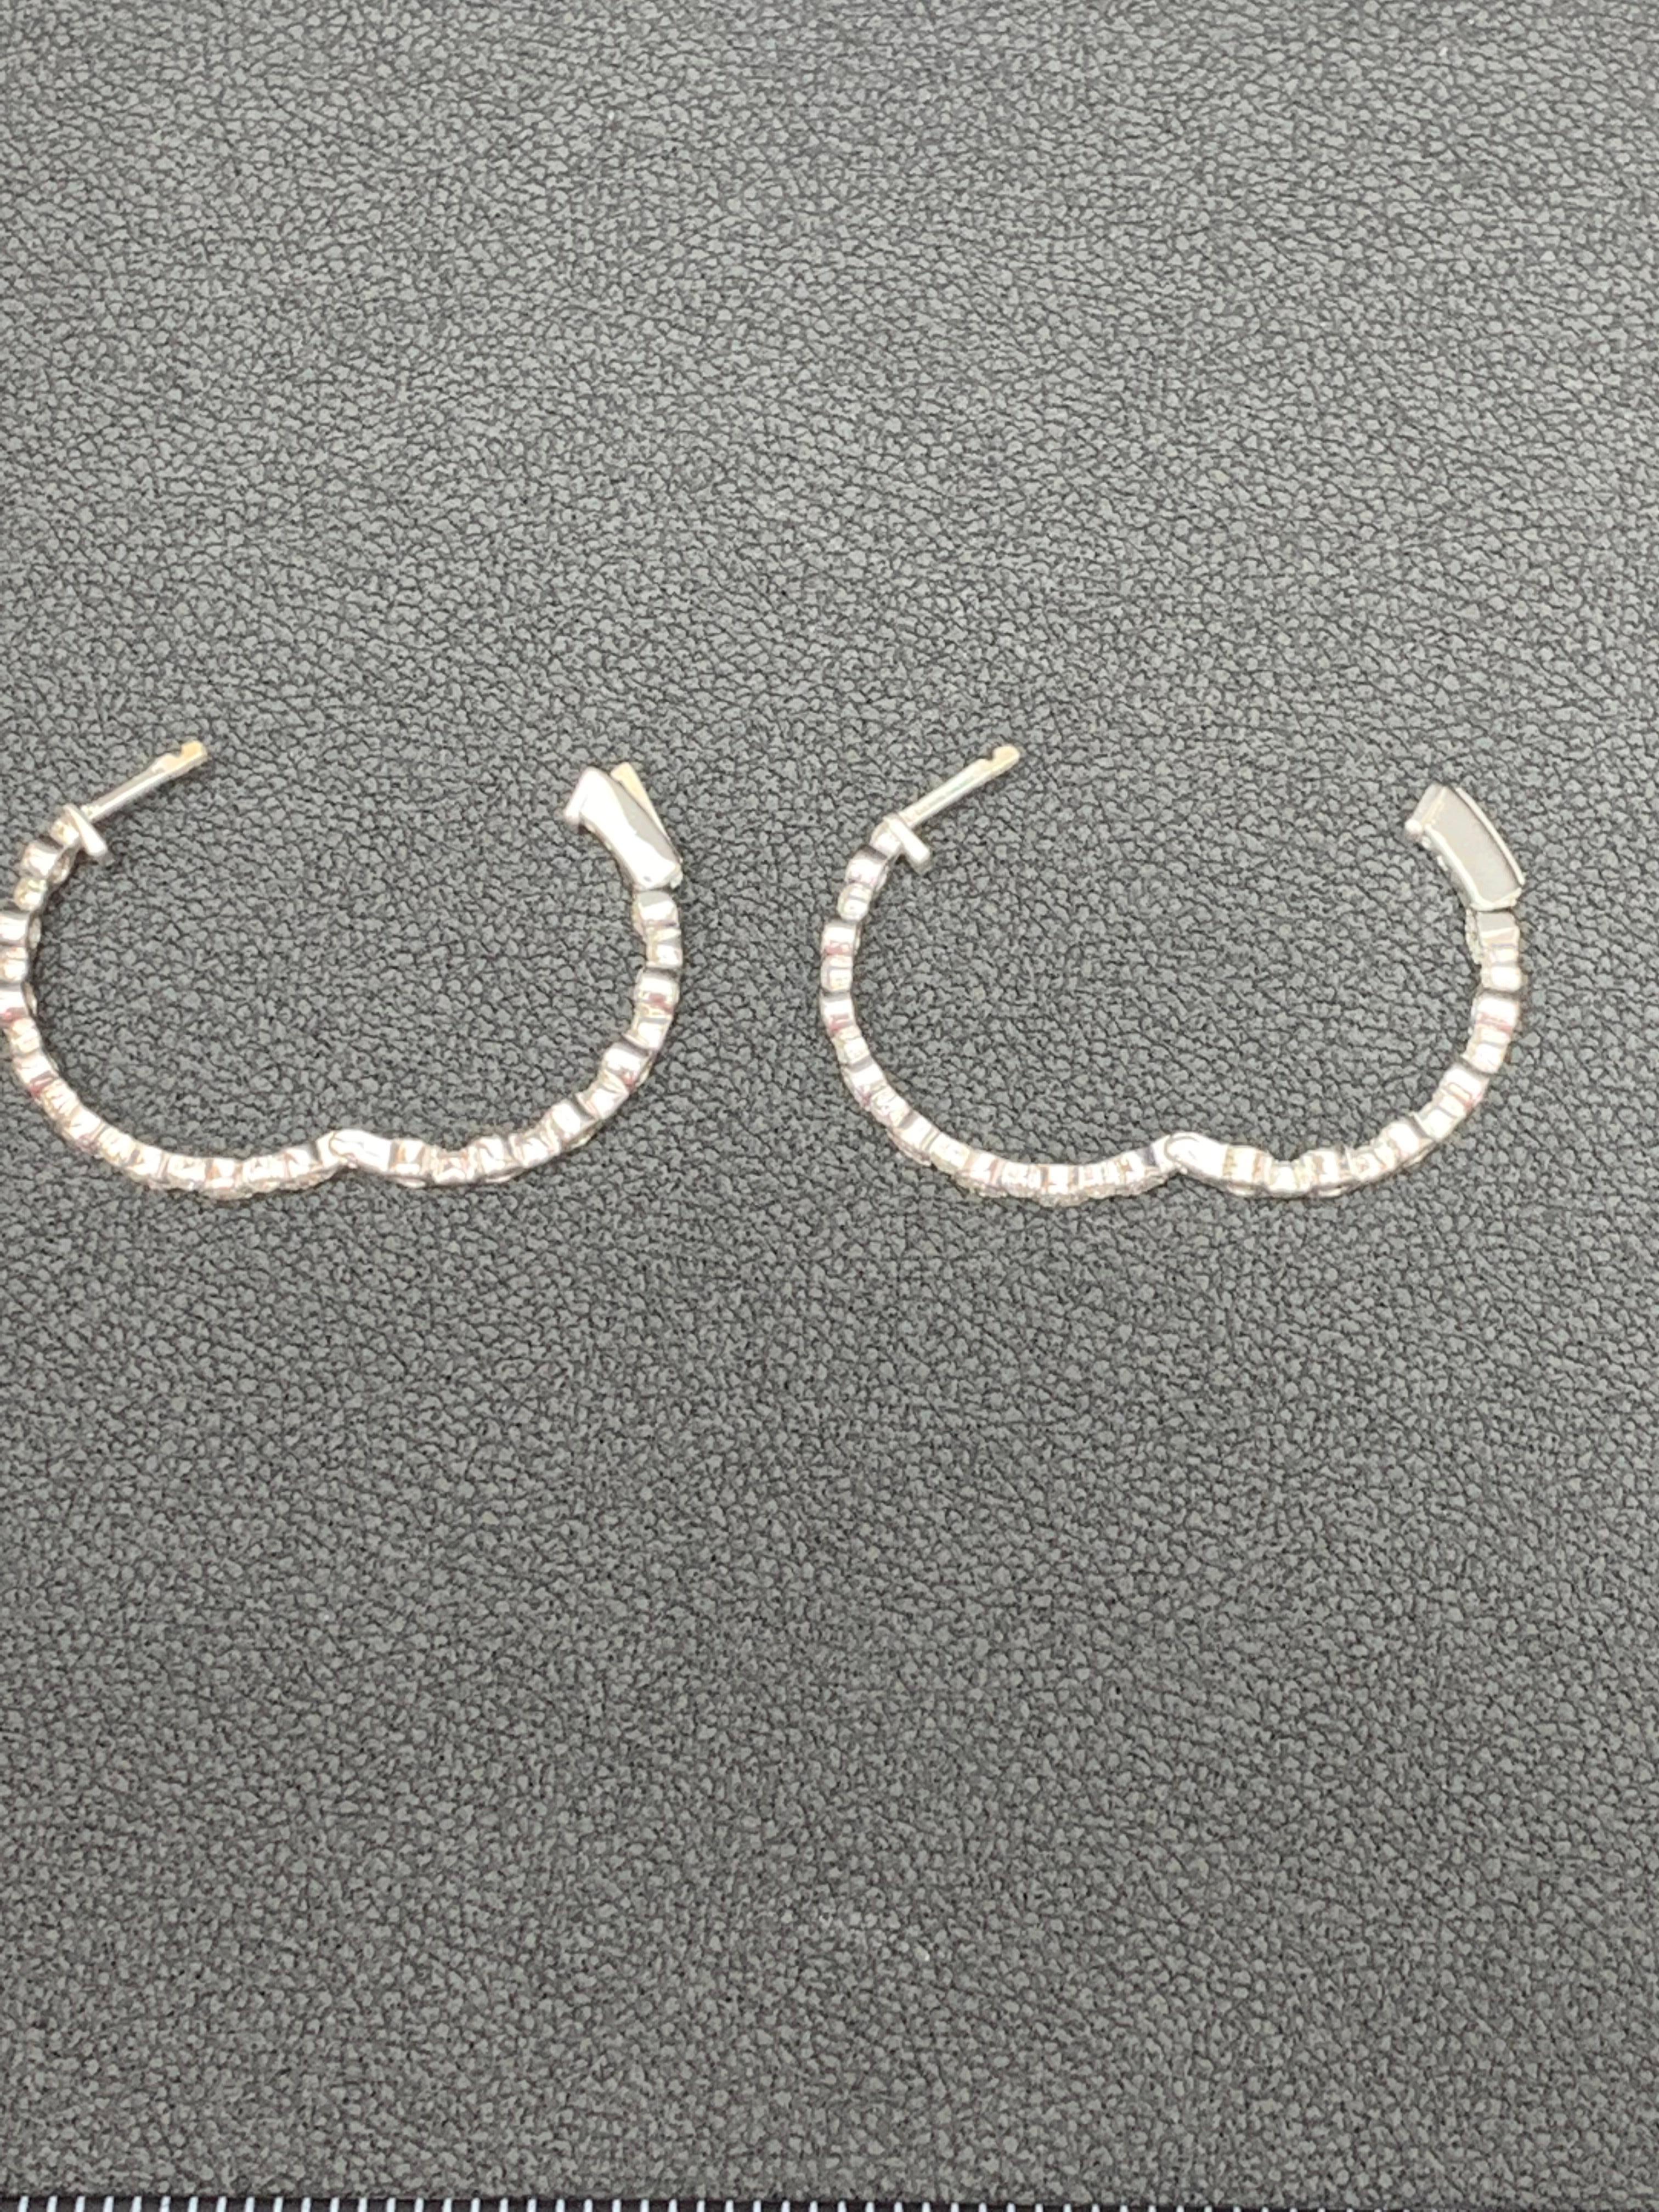 2.00 Carat Total Round Diamond Hoop Earrings in 14K White Gold For Sale 3